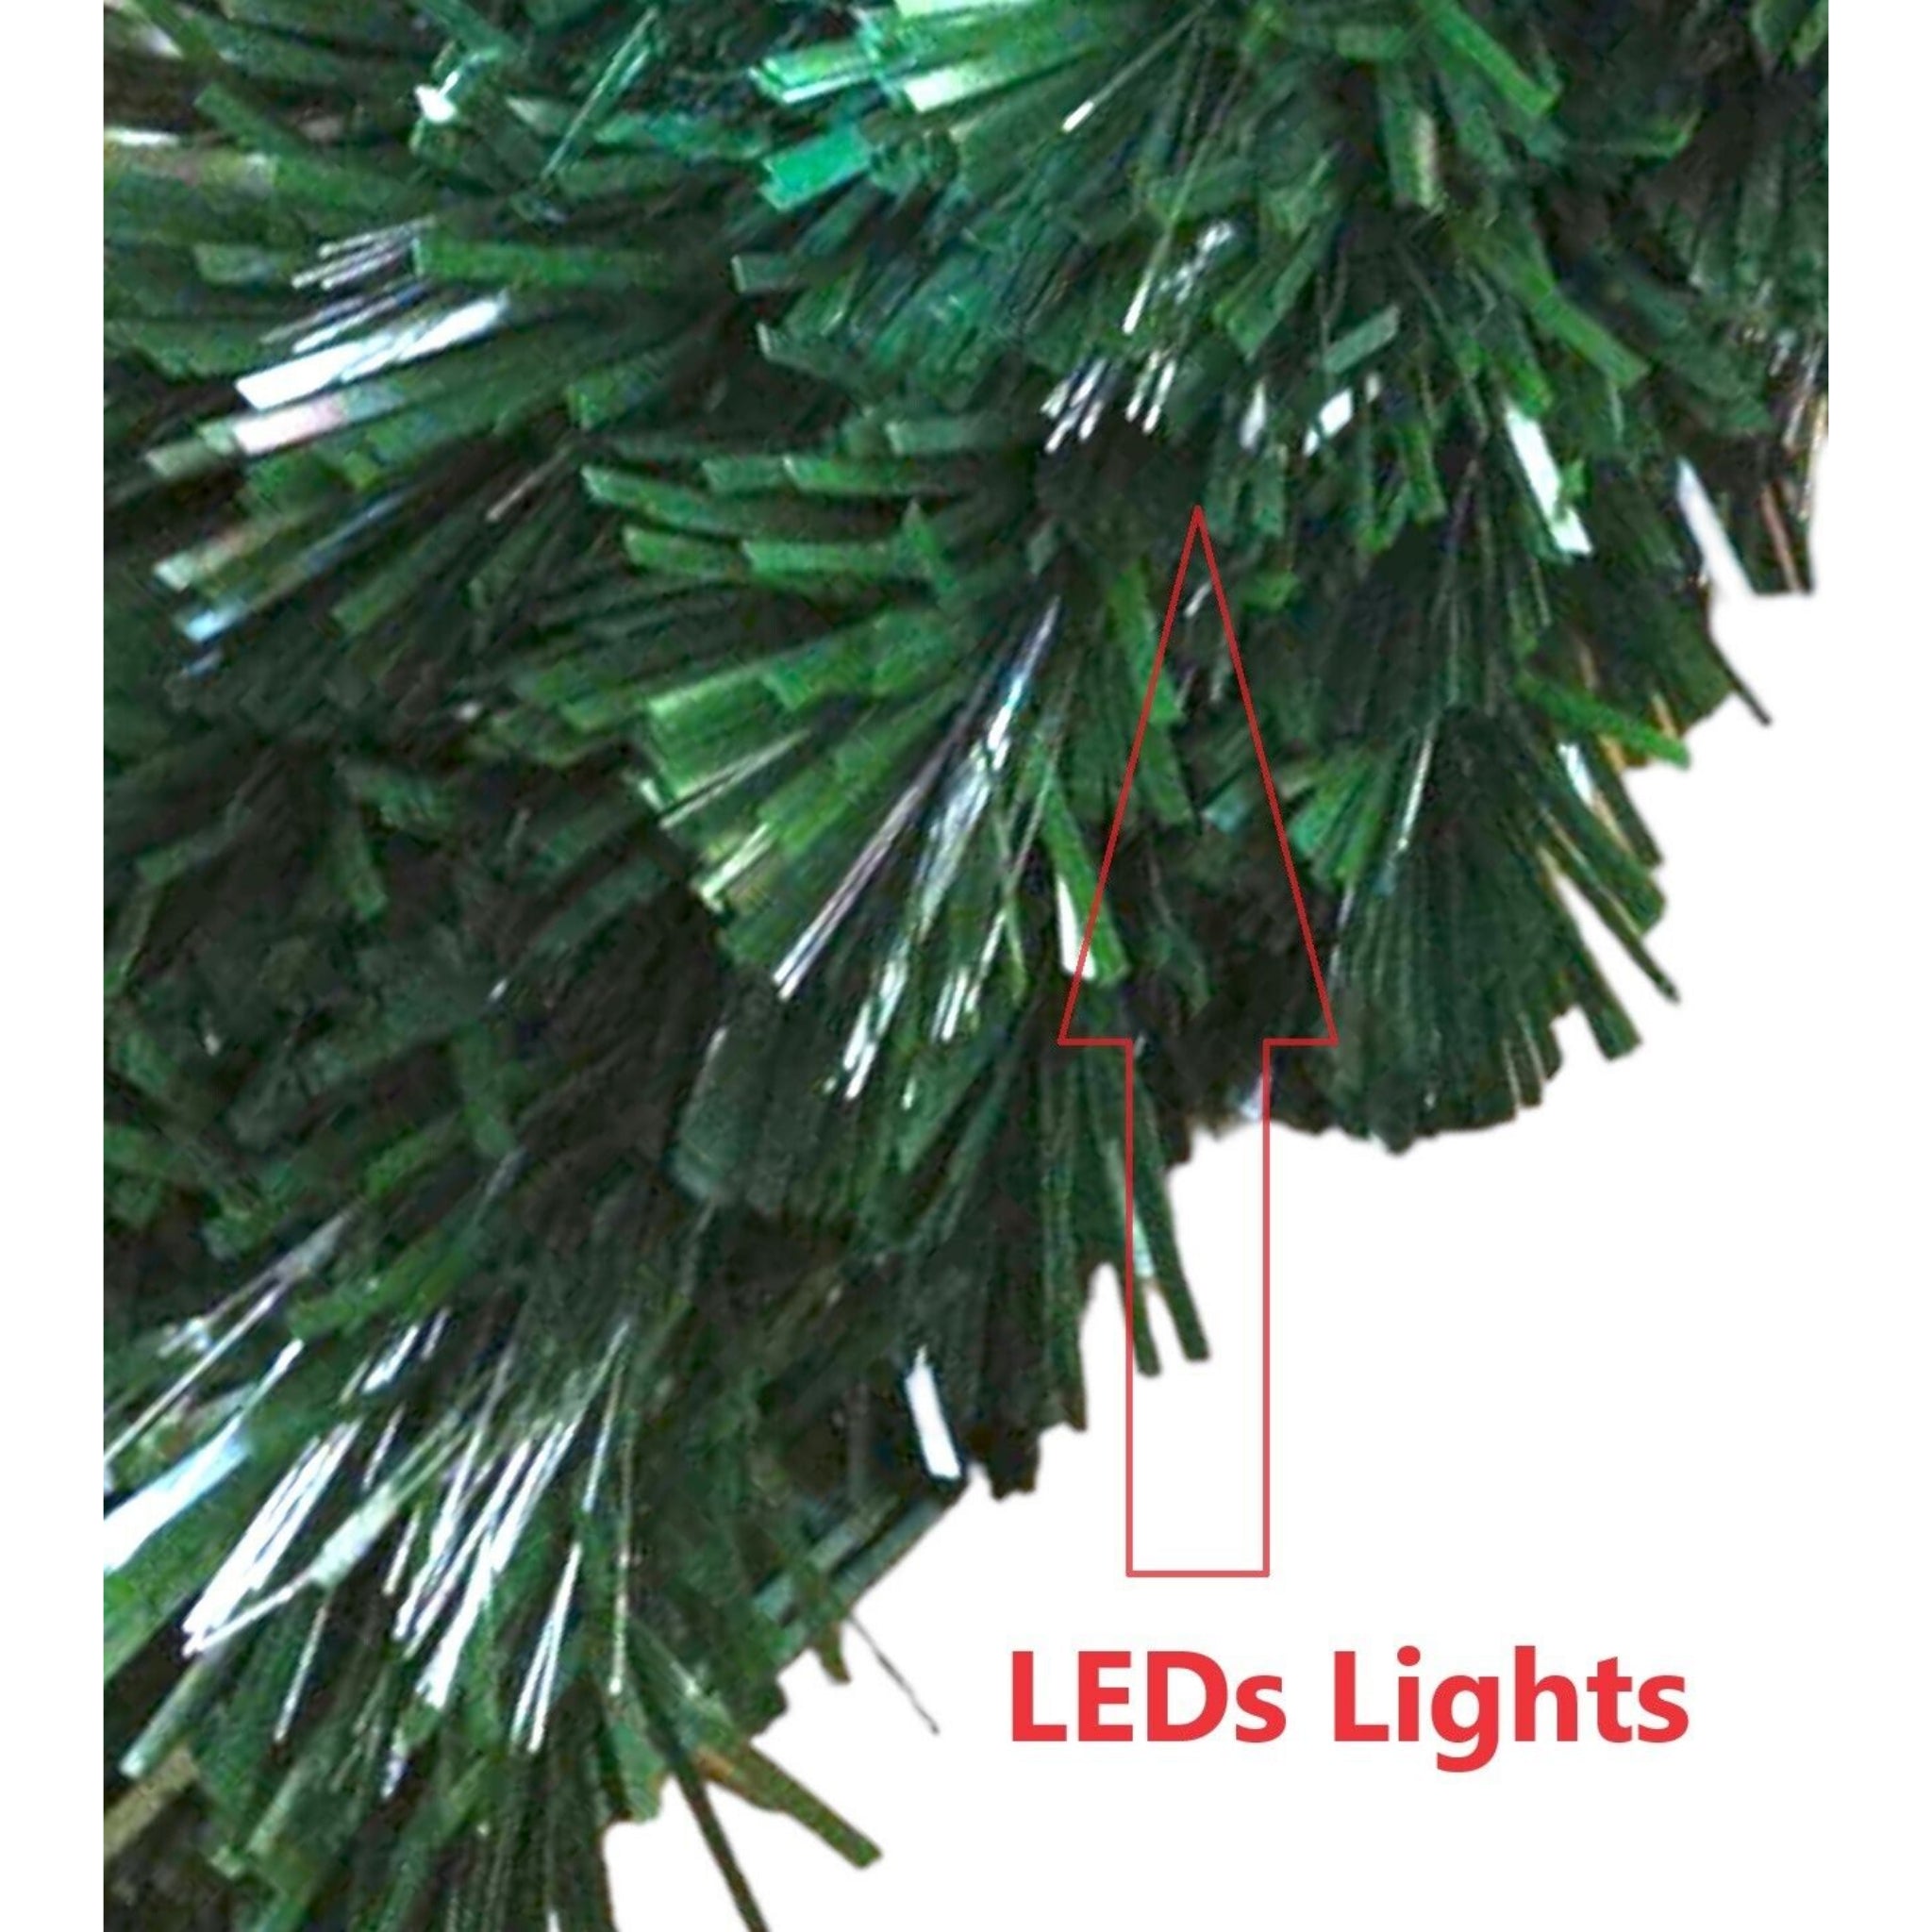 Beclen Harp 5FT Christmas/Xmas Tree Pre Lit Fiber Optic LED Lights Star 180 Tips And 180 LEDs-Perfect Christmas/Xmas Decoration